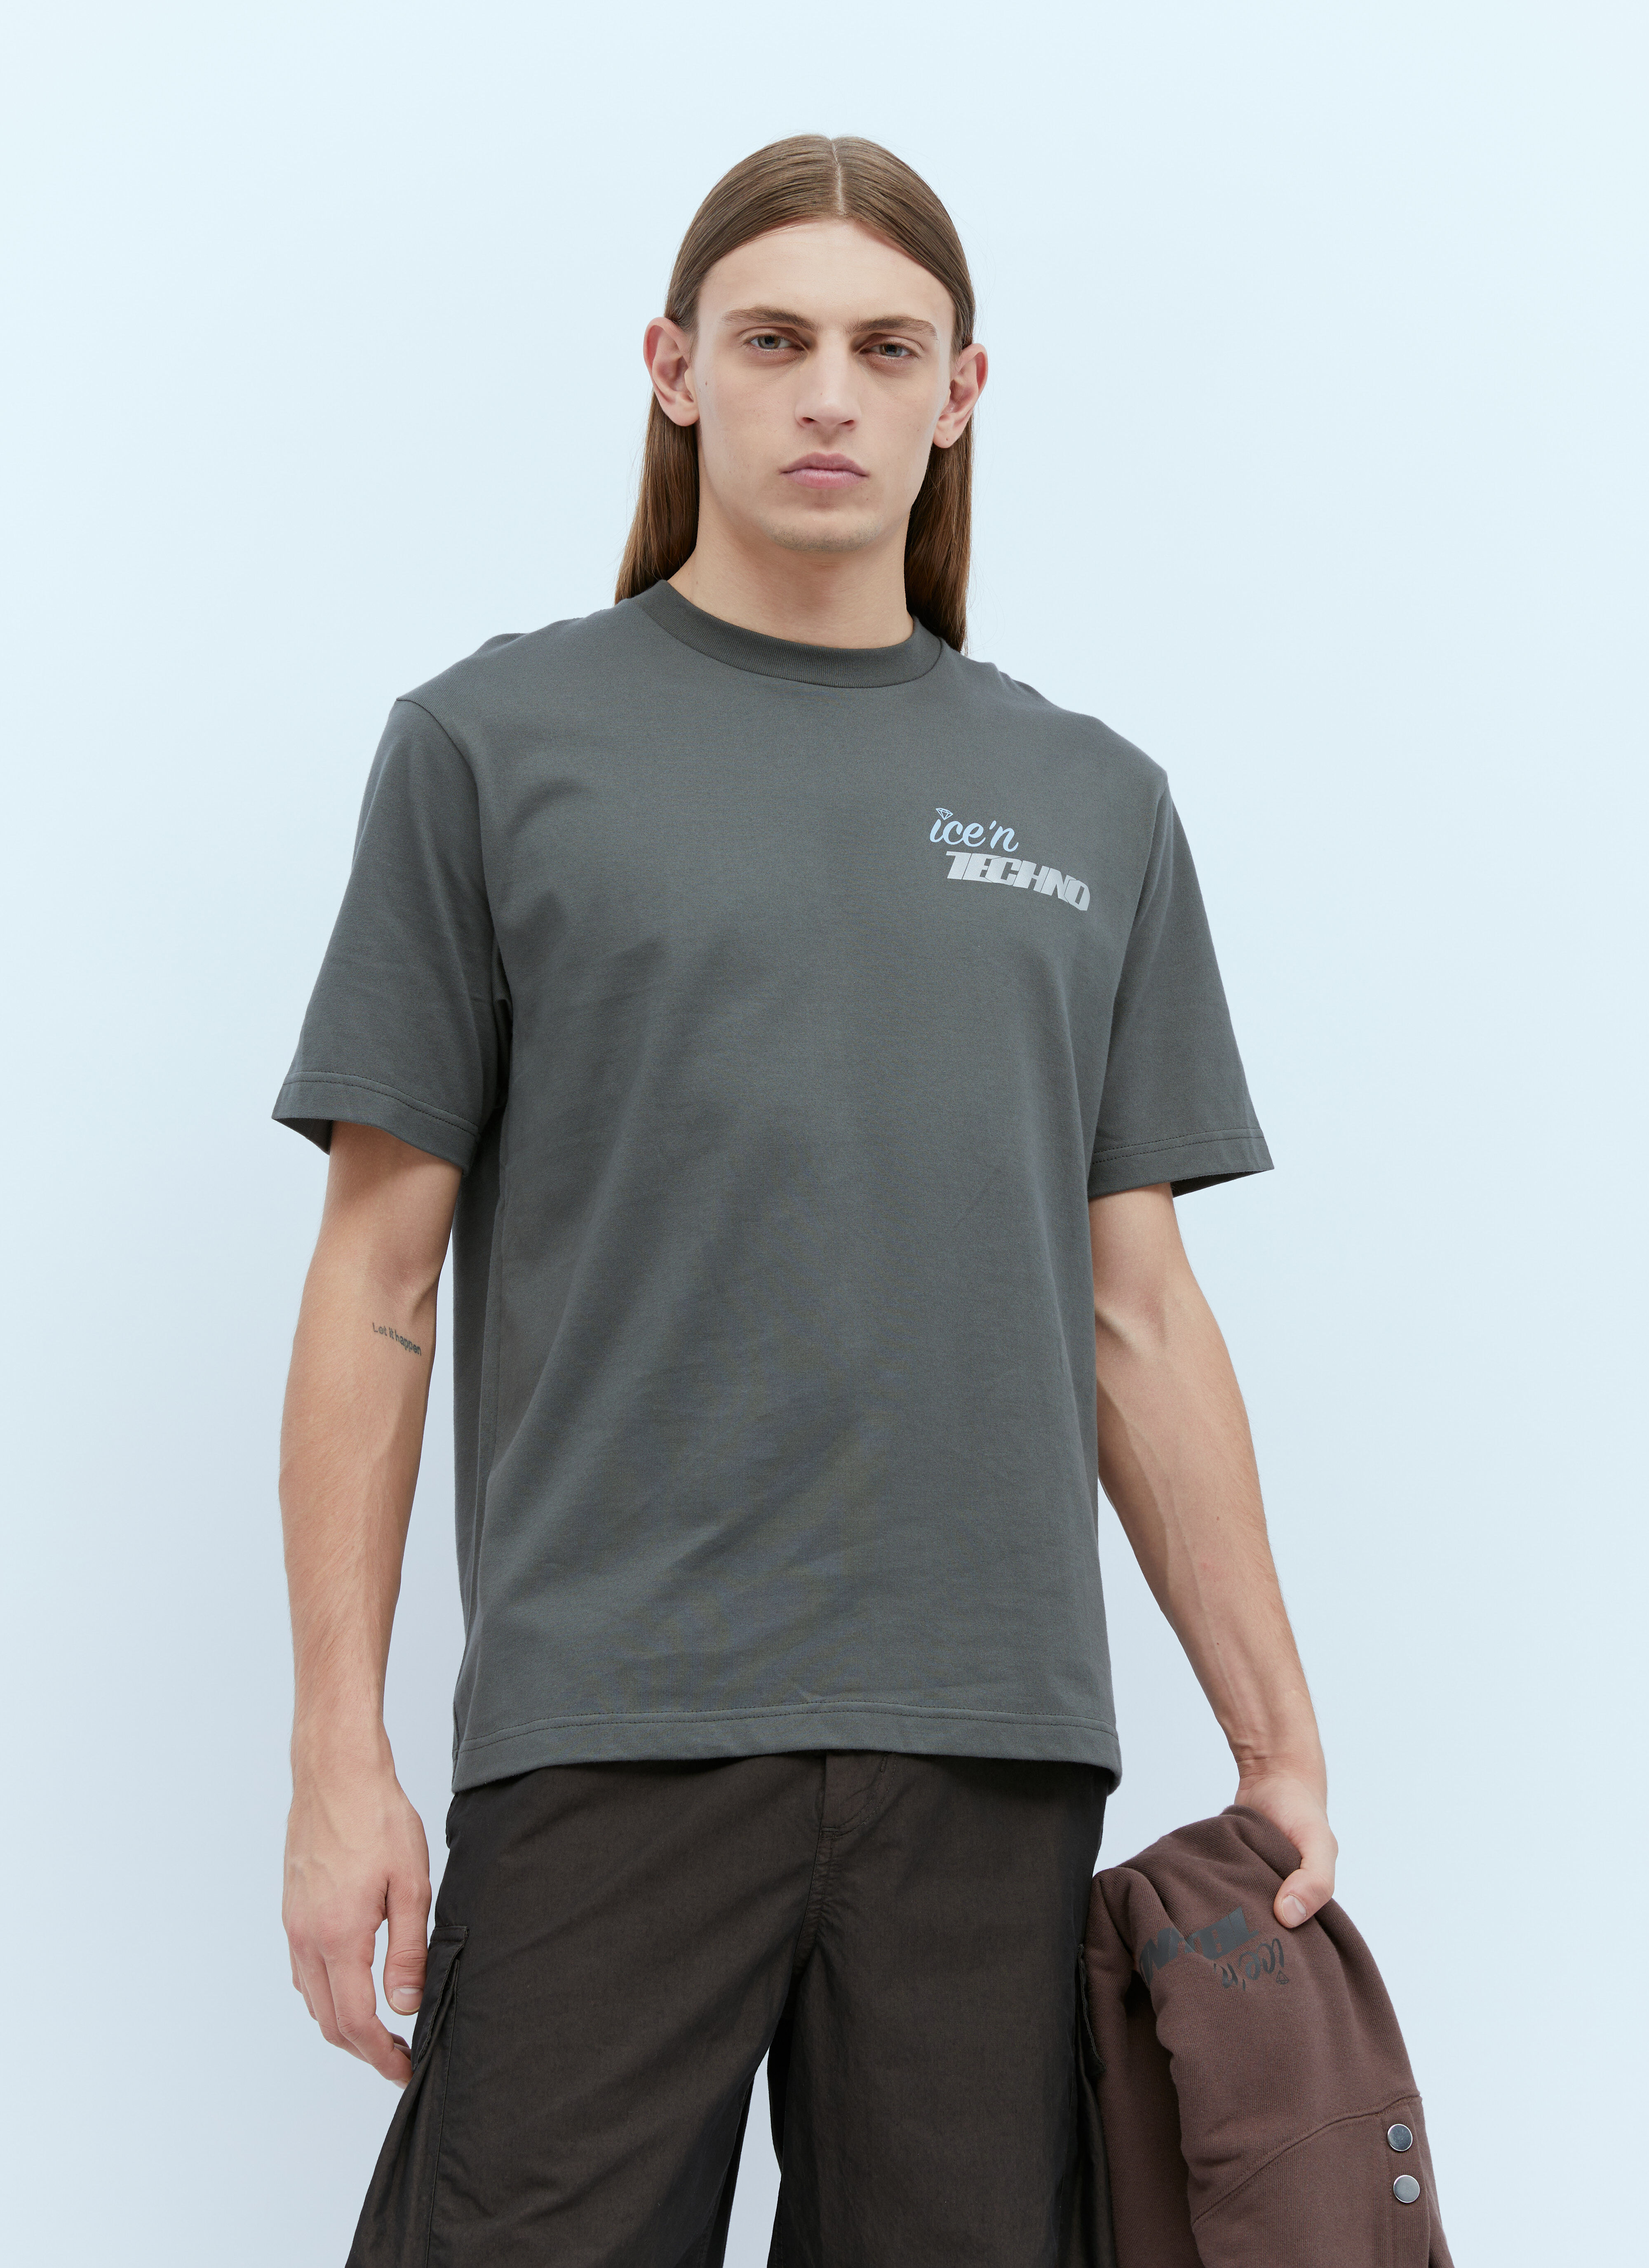 Ice & Techno Logo Printed Hoodies & T-Shirts for Men | LN-CC®